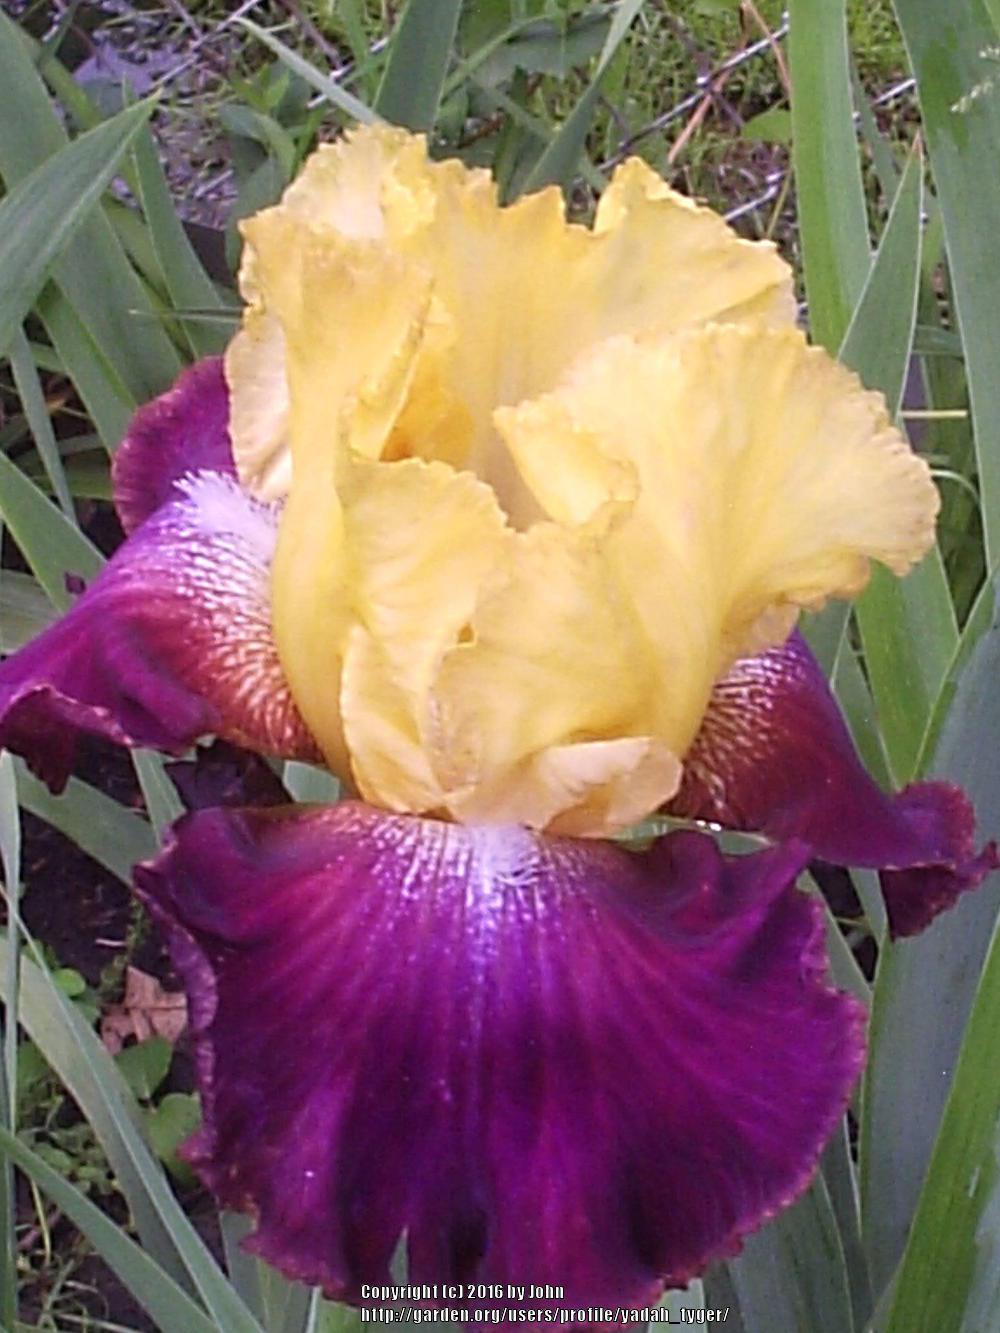 Photo of Tall Bearded Iris (Iris 'Darcy's Choice') uploaded by yadah_tyger